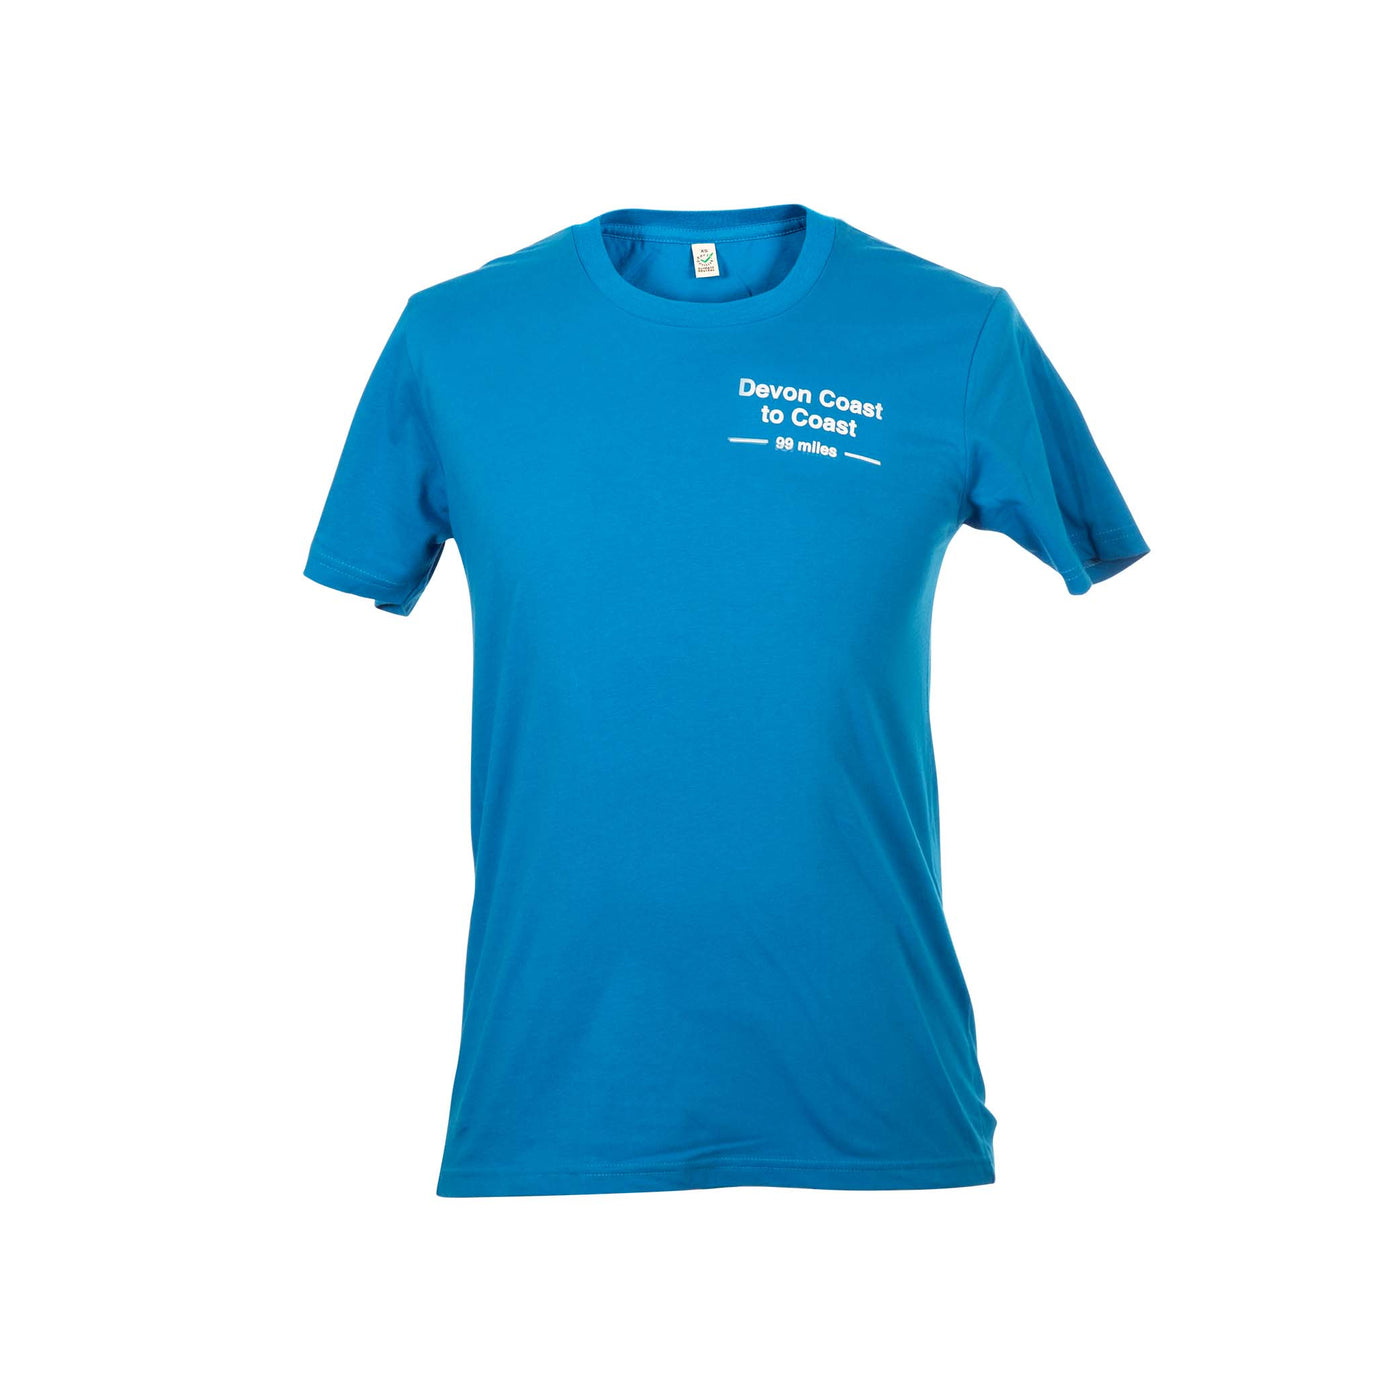 Devon Coast to Coast - unisex t-shirt